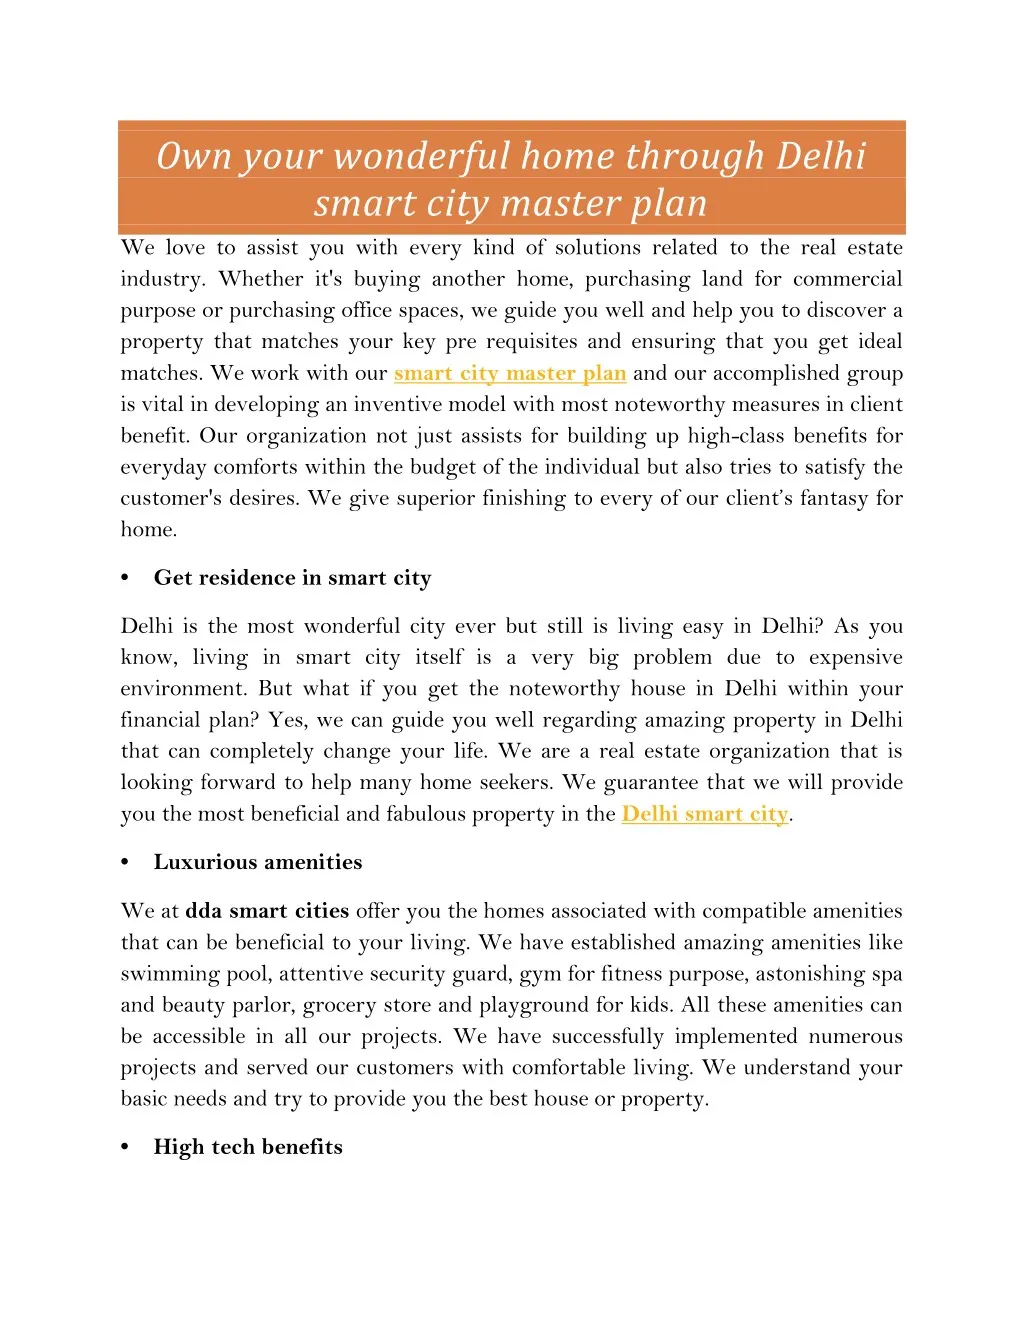 own your wonderful home through delhi smart city